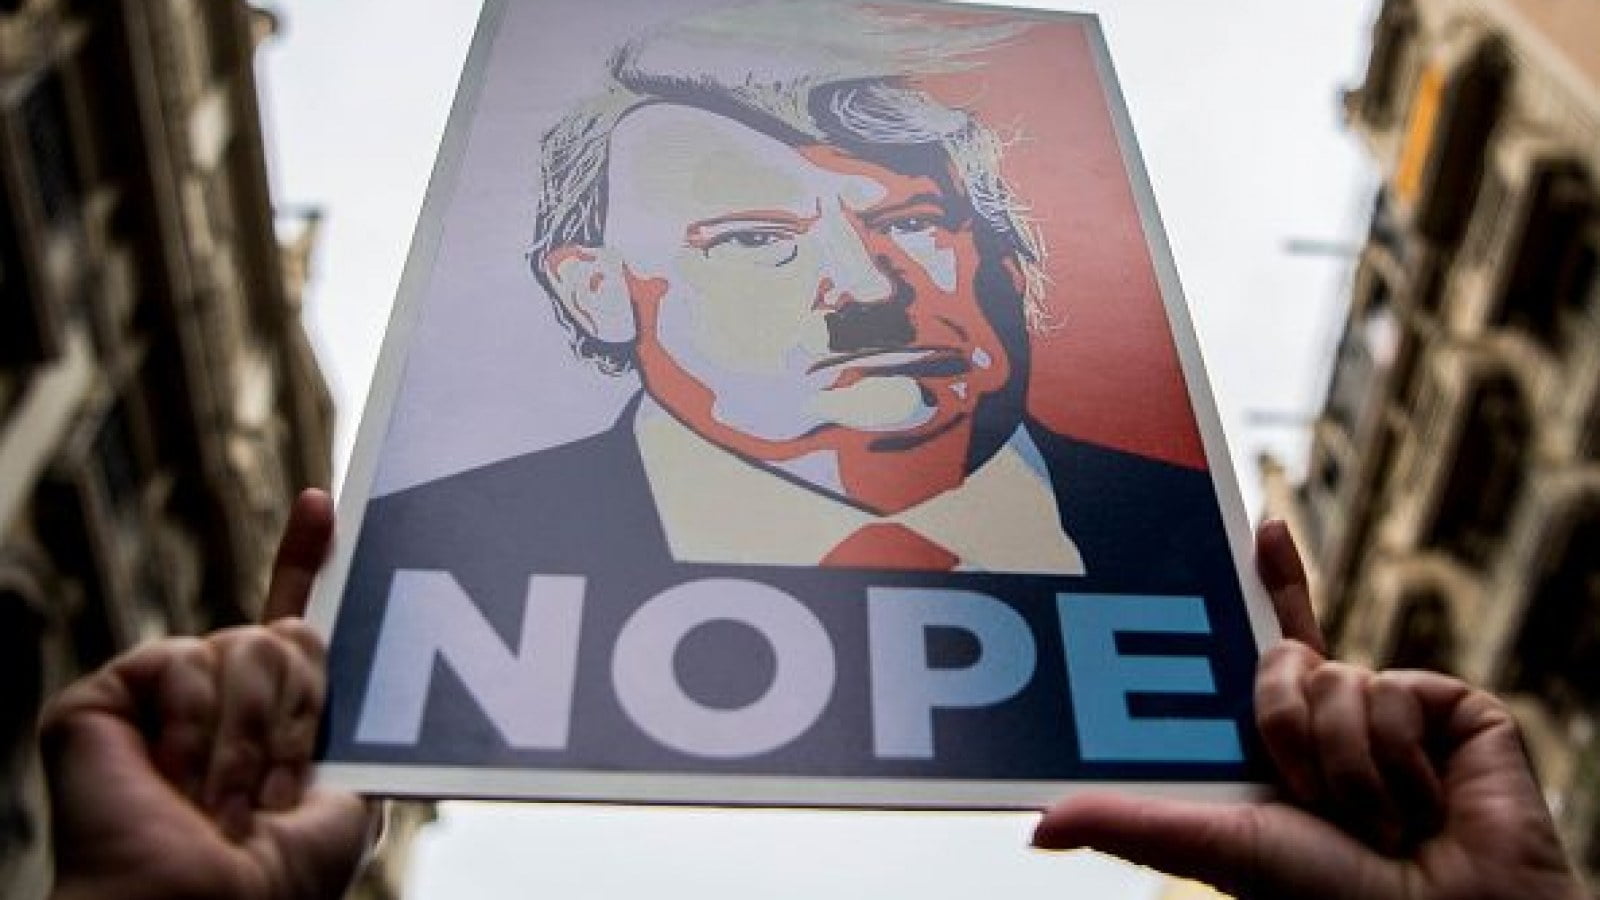 Trump placard